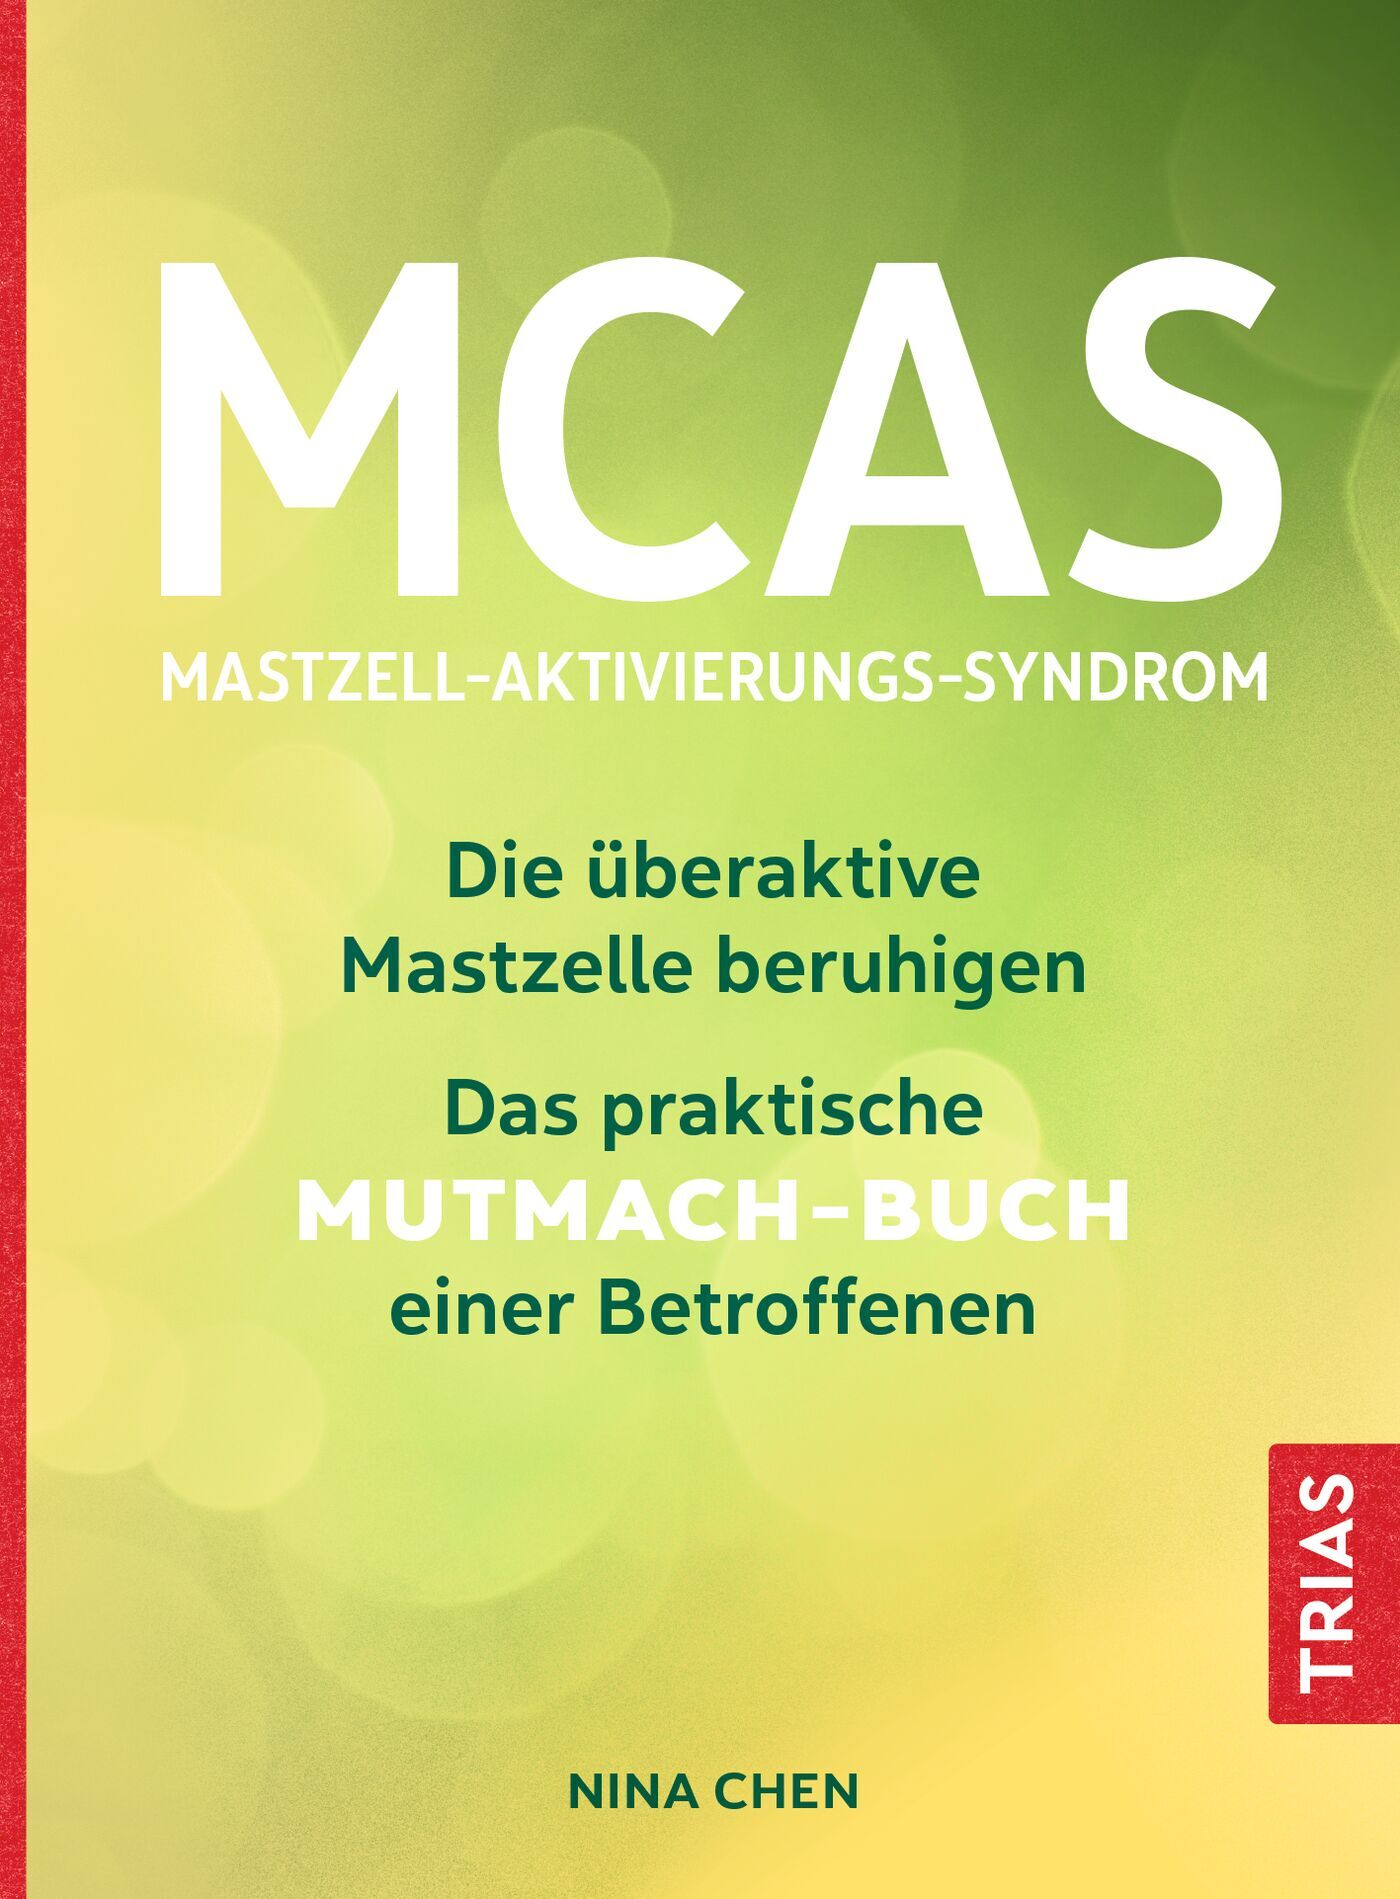 MCAS - Mastzell-Aktivierungs-Syndrom, 9783432117485